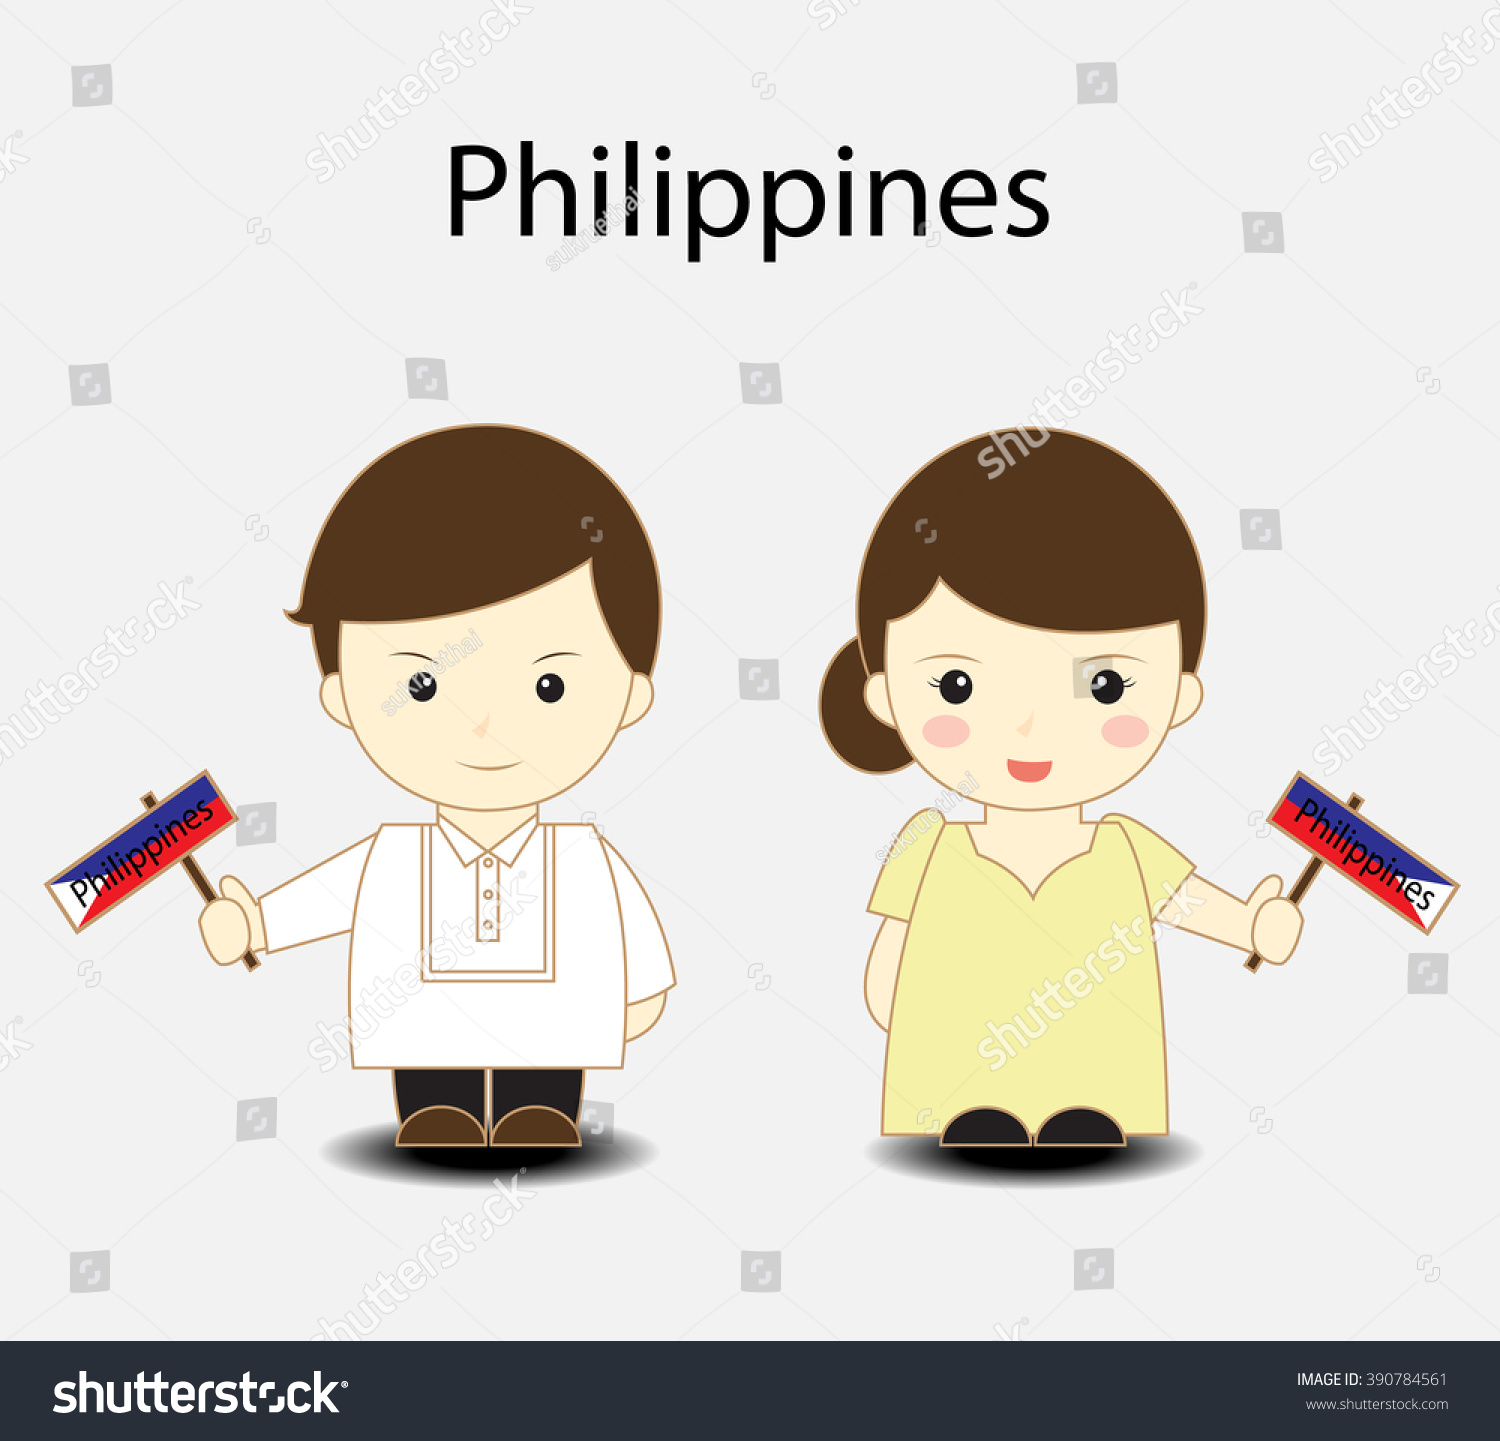 Philippines Cartoon Vector Stock Vector (Royalty Free) 390784561 ...